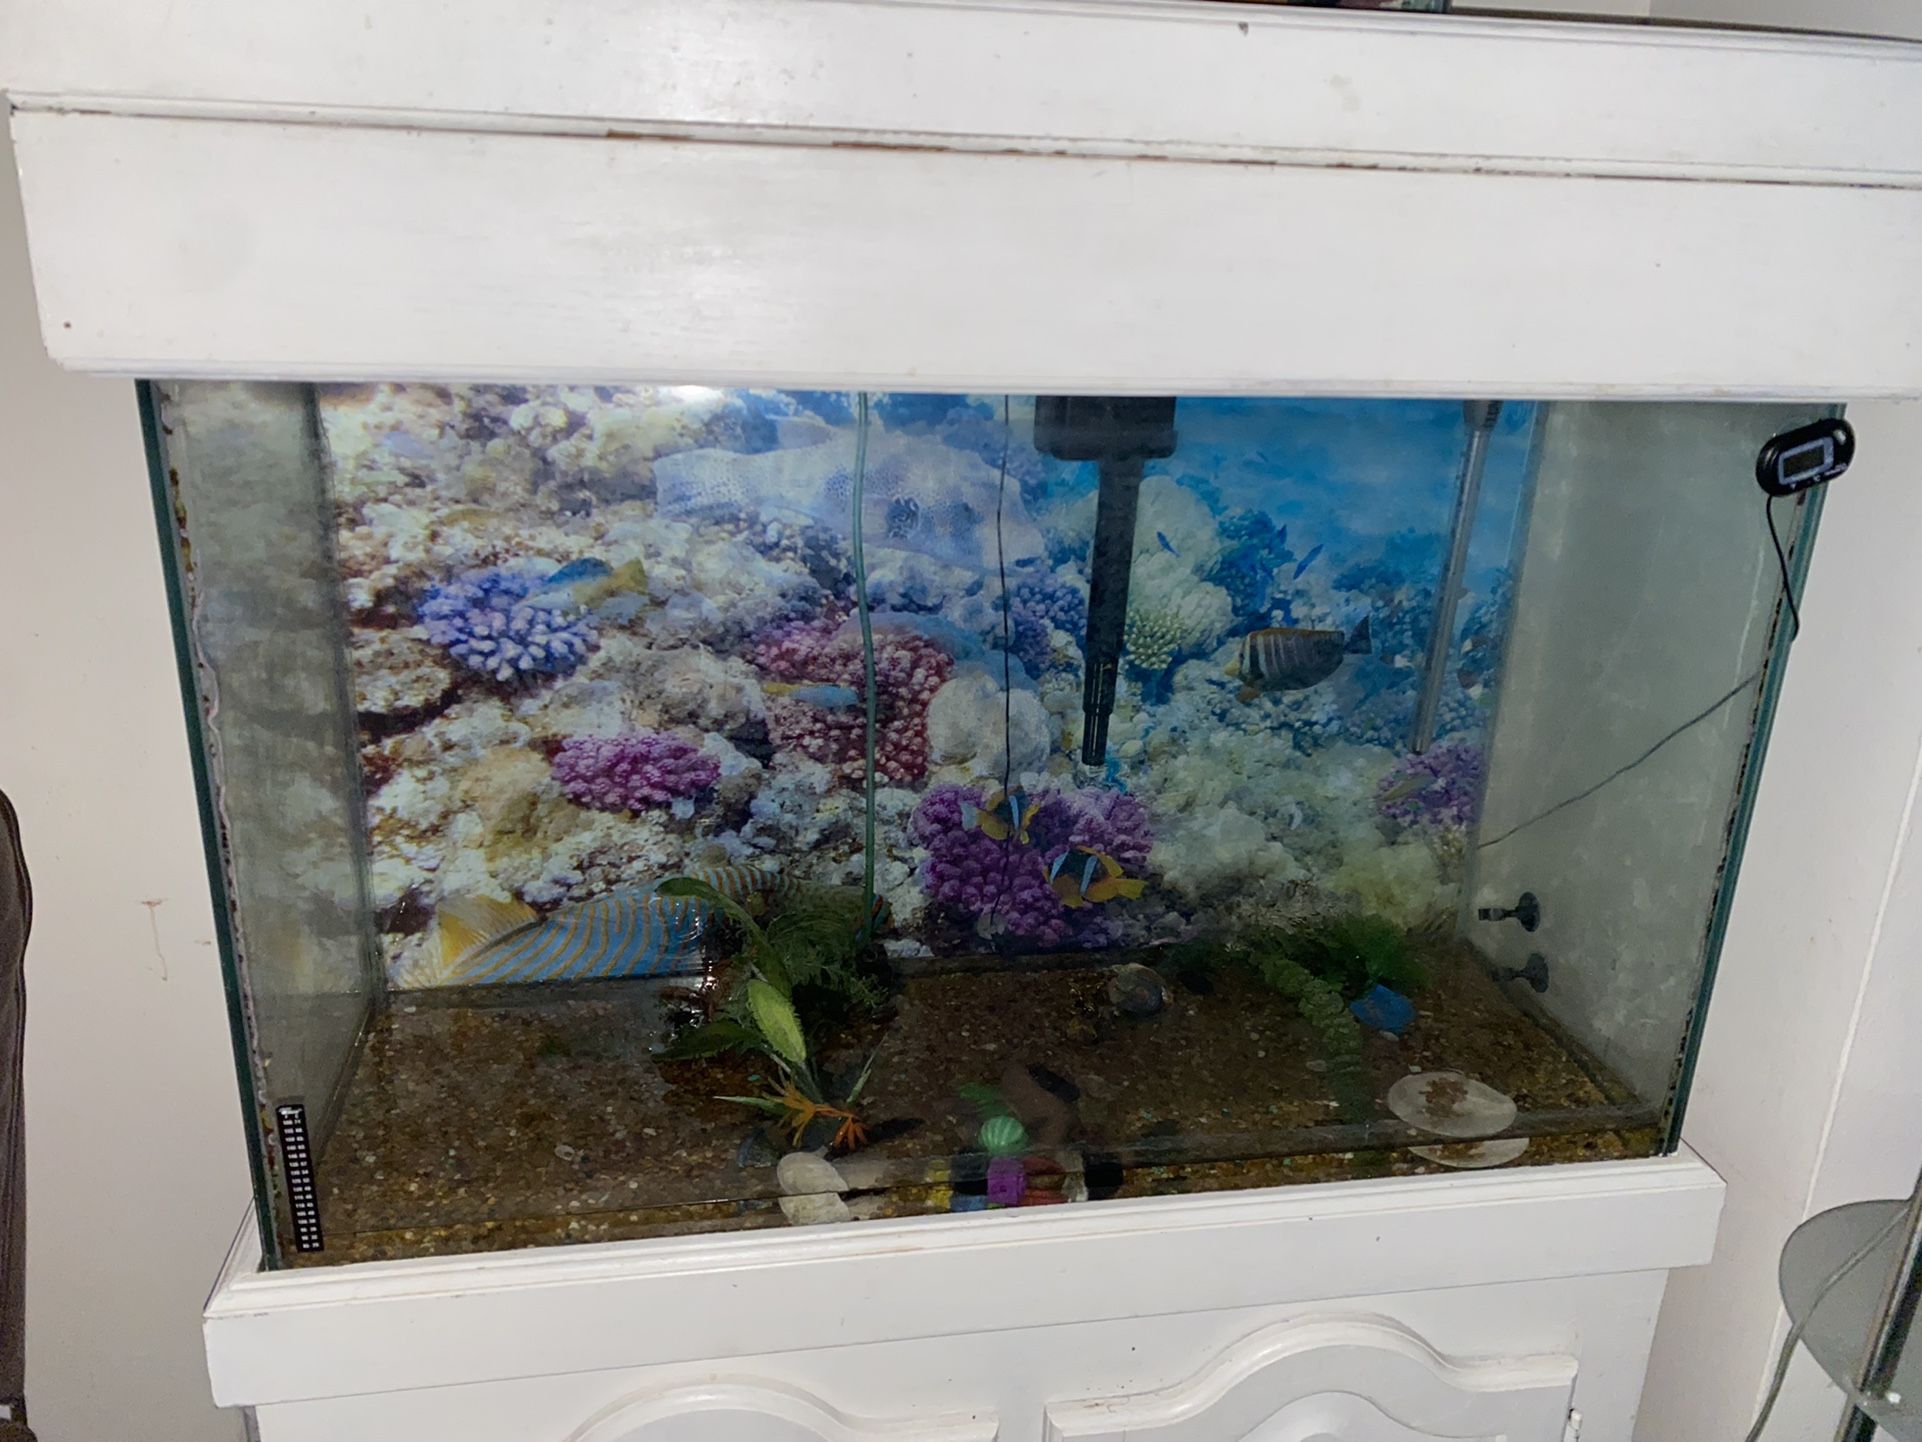  Fish Tank-aquarium-55 Gal.with canopy